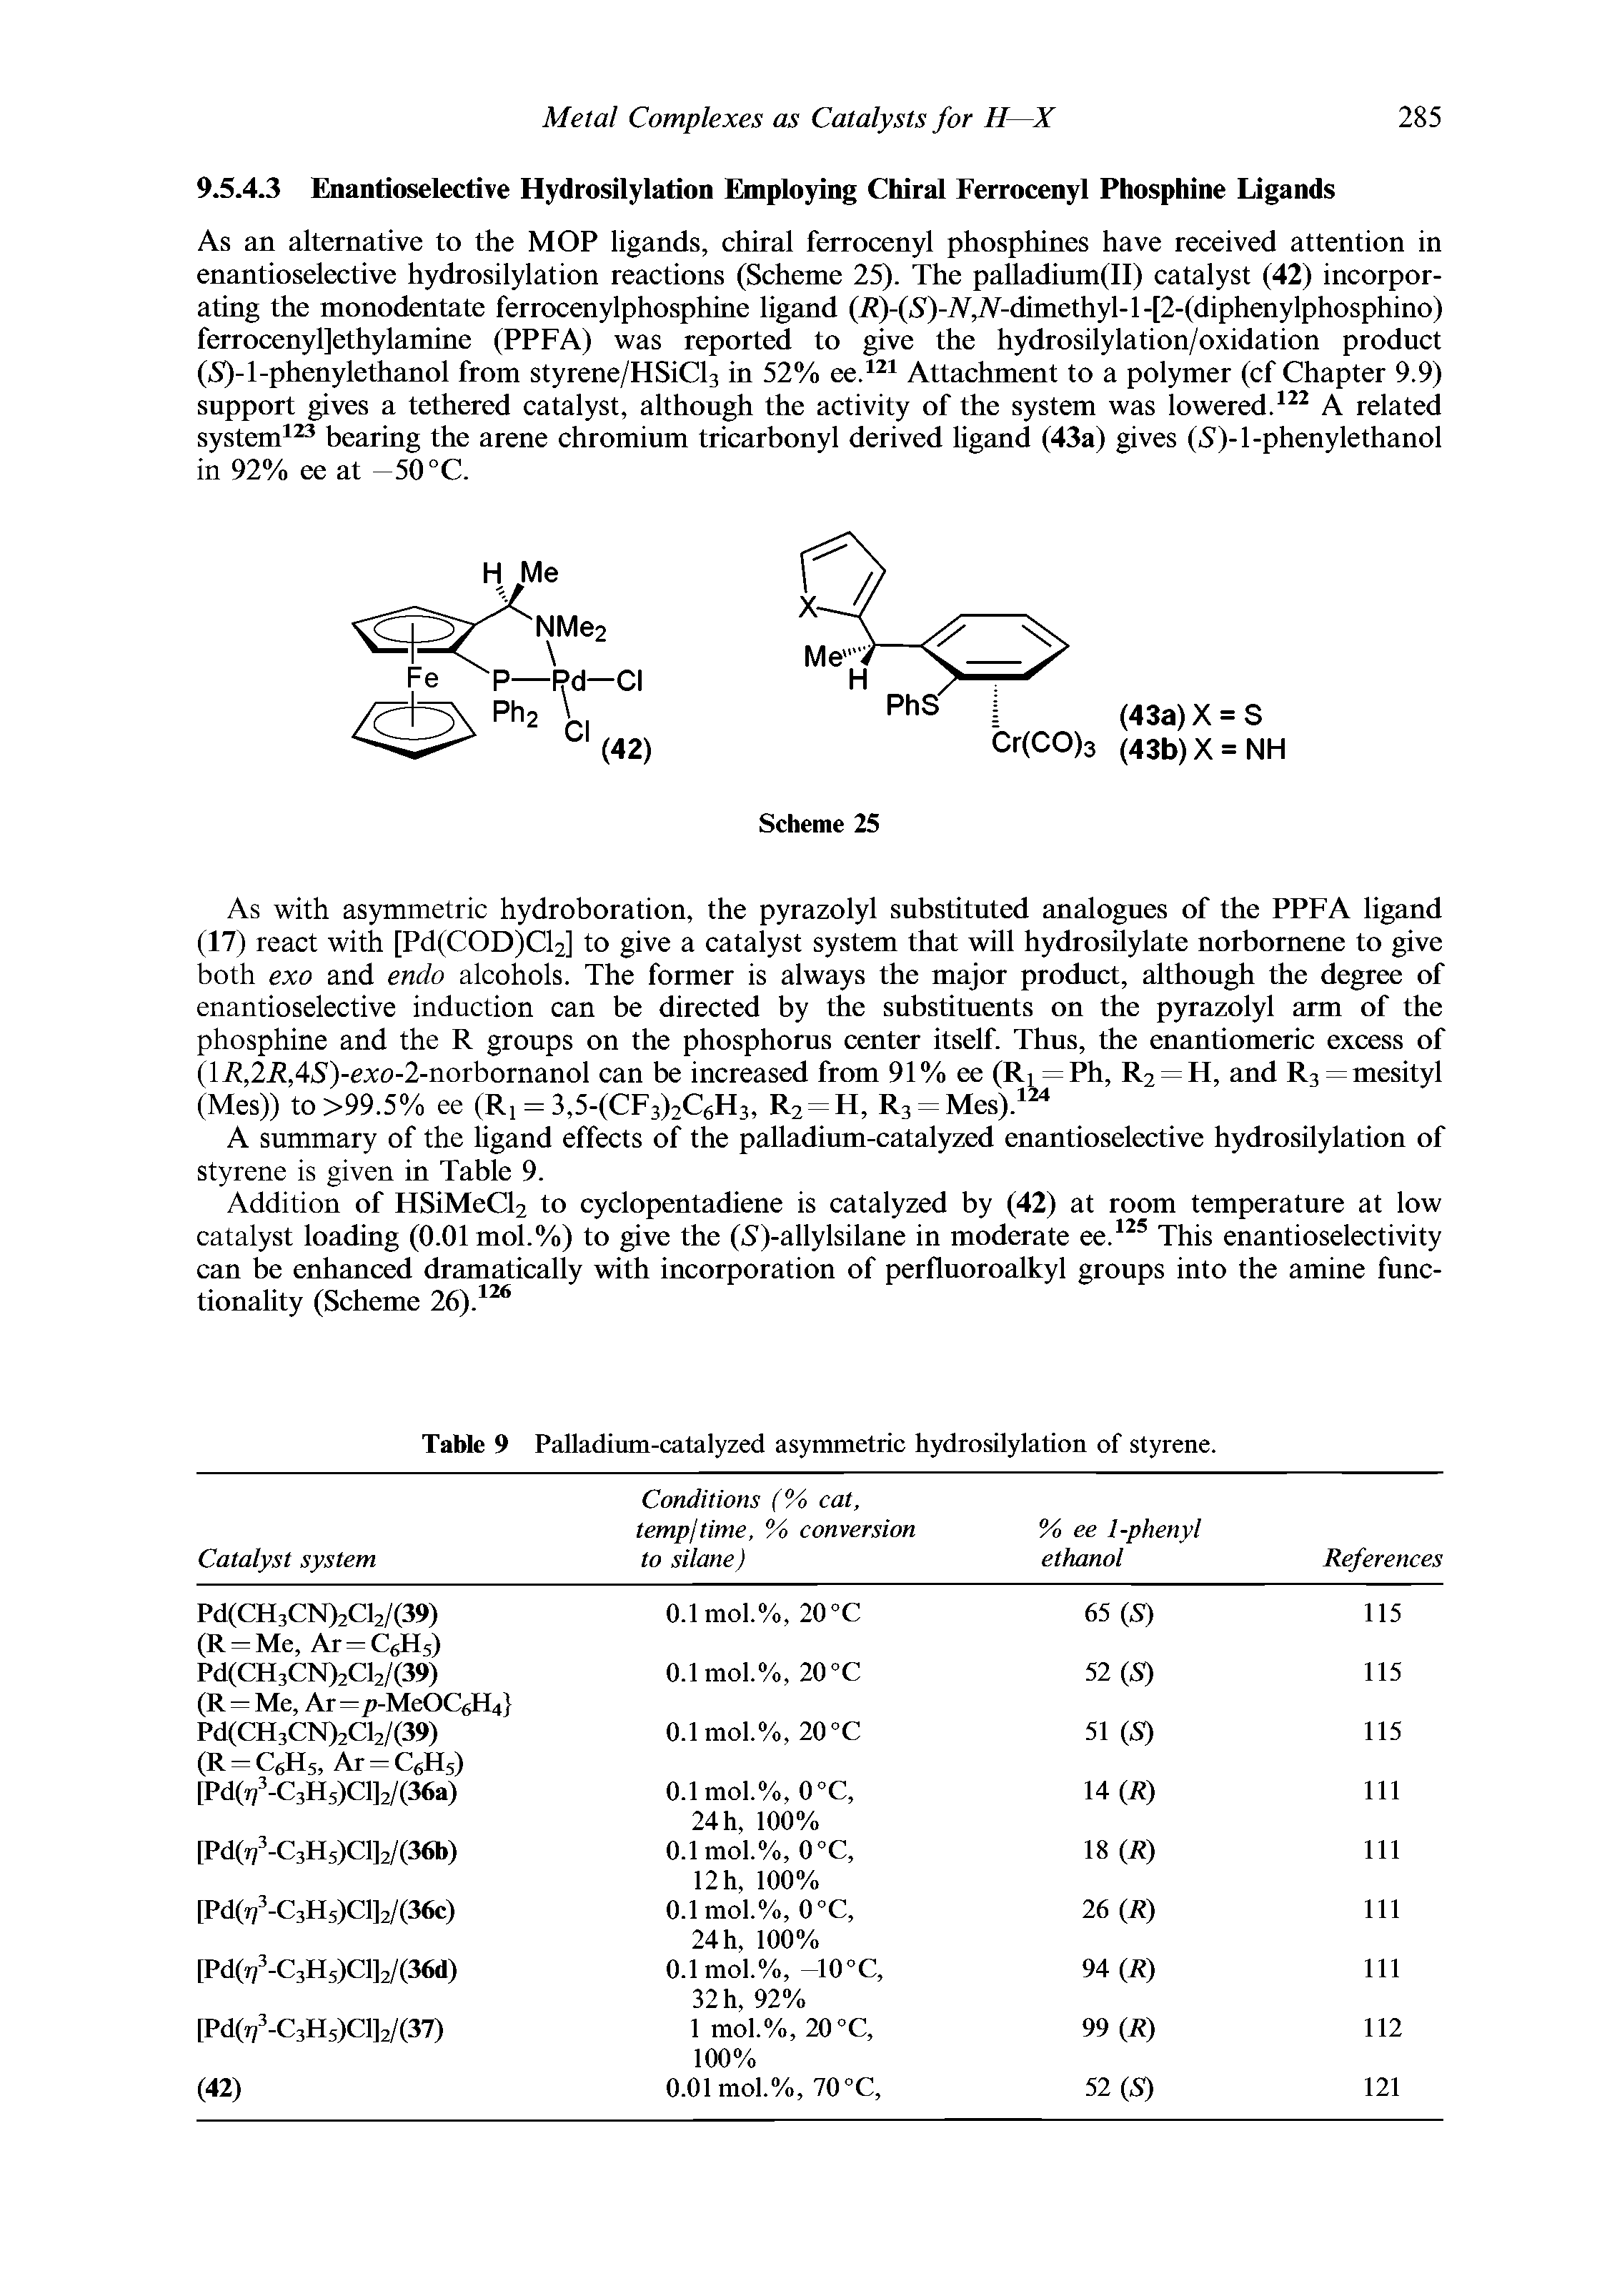 Table 9 Palladium-catalyzed asymmetric hydrosilylation of styrene.